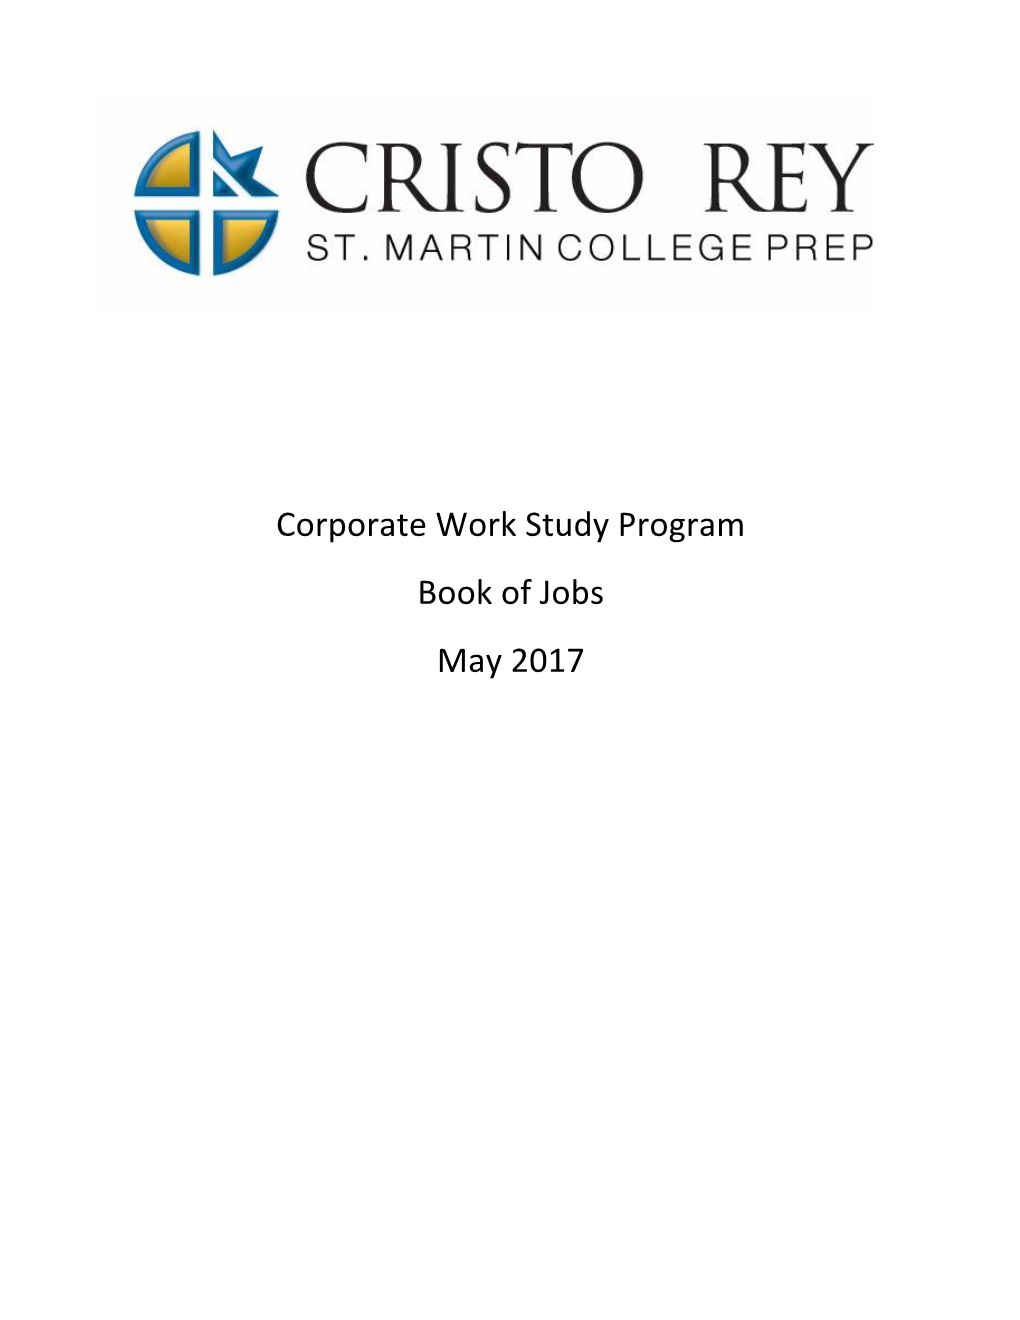 Corporate Work Study Program Book of Jobs May 2017